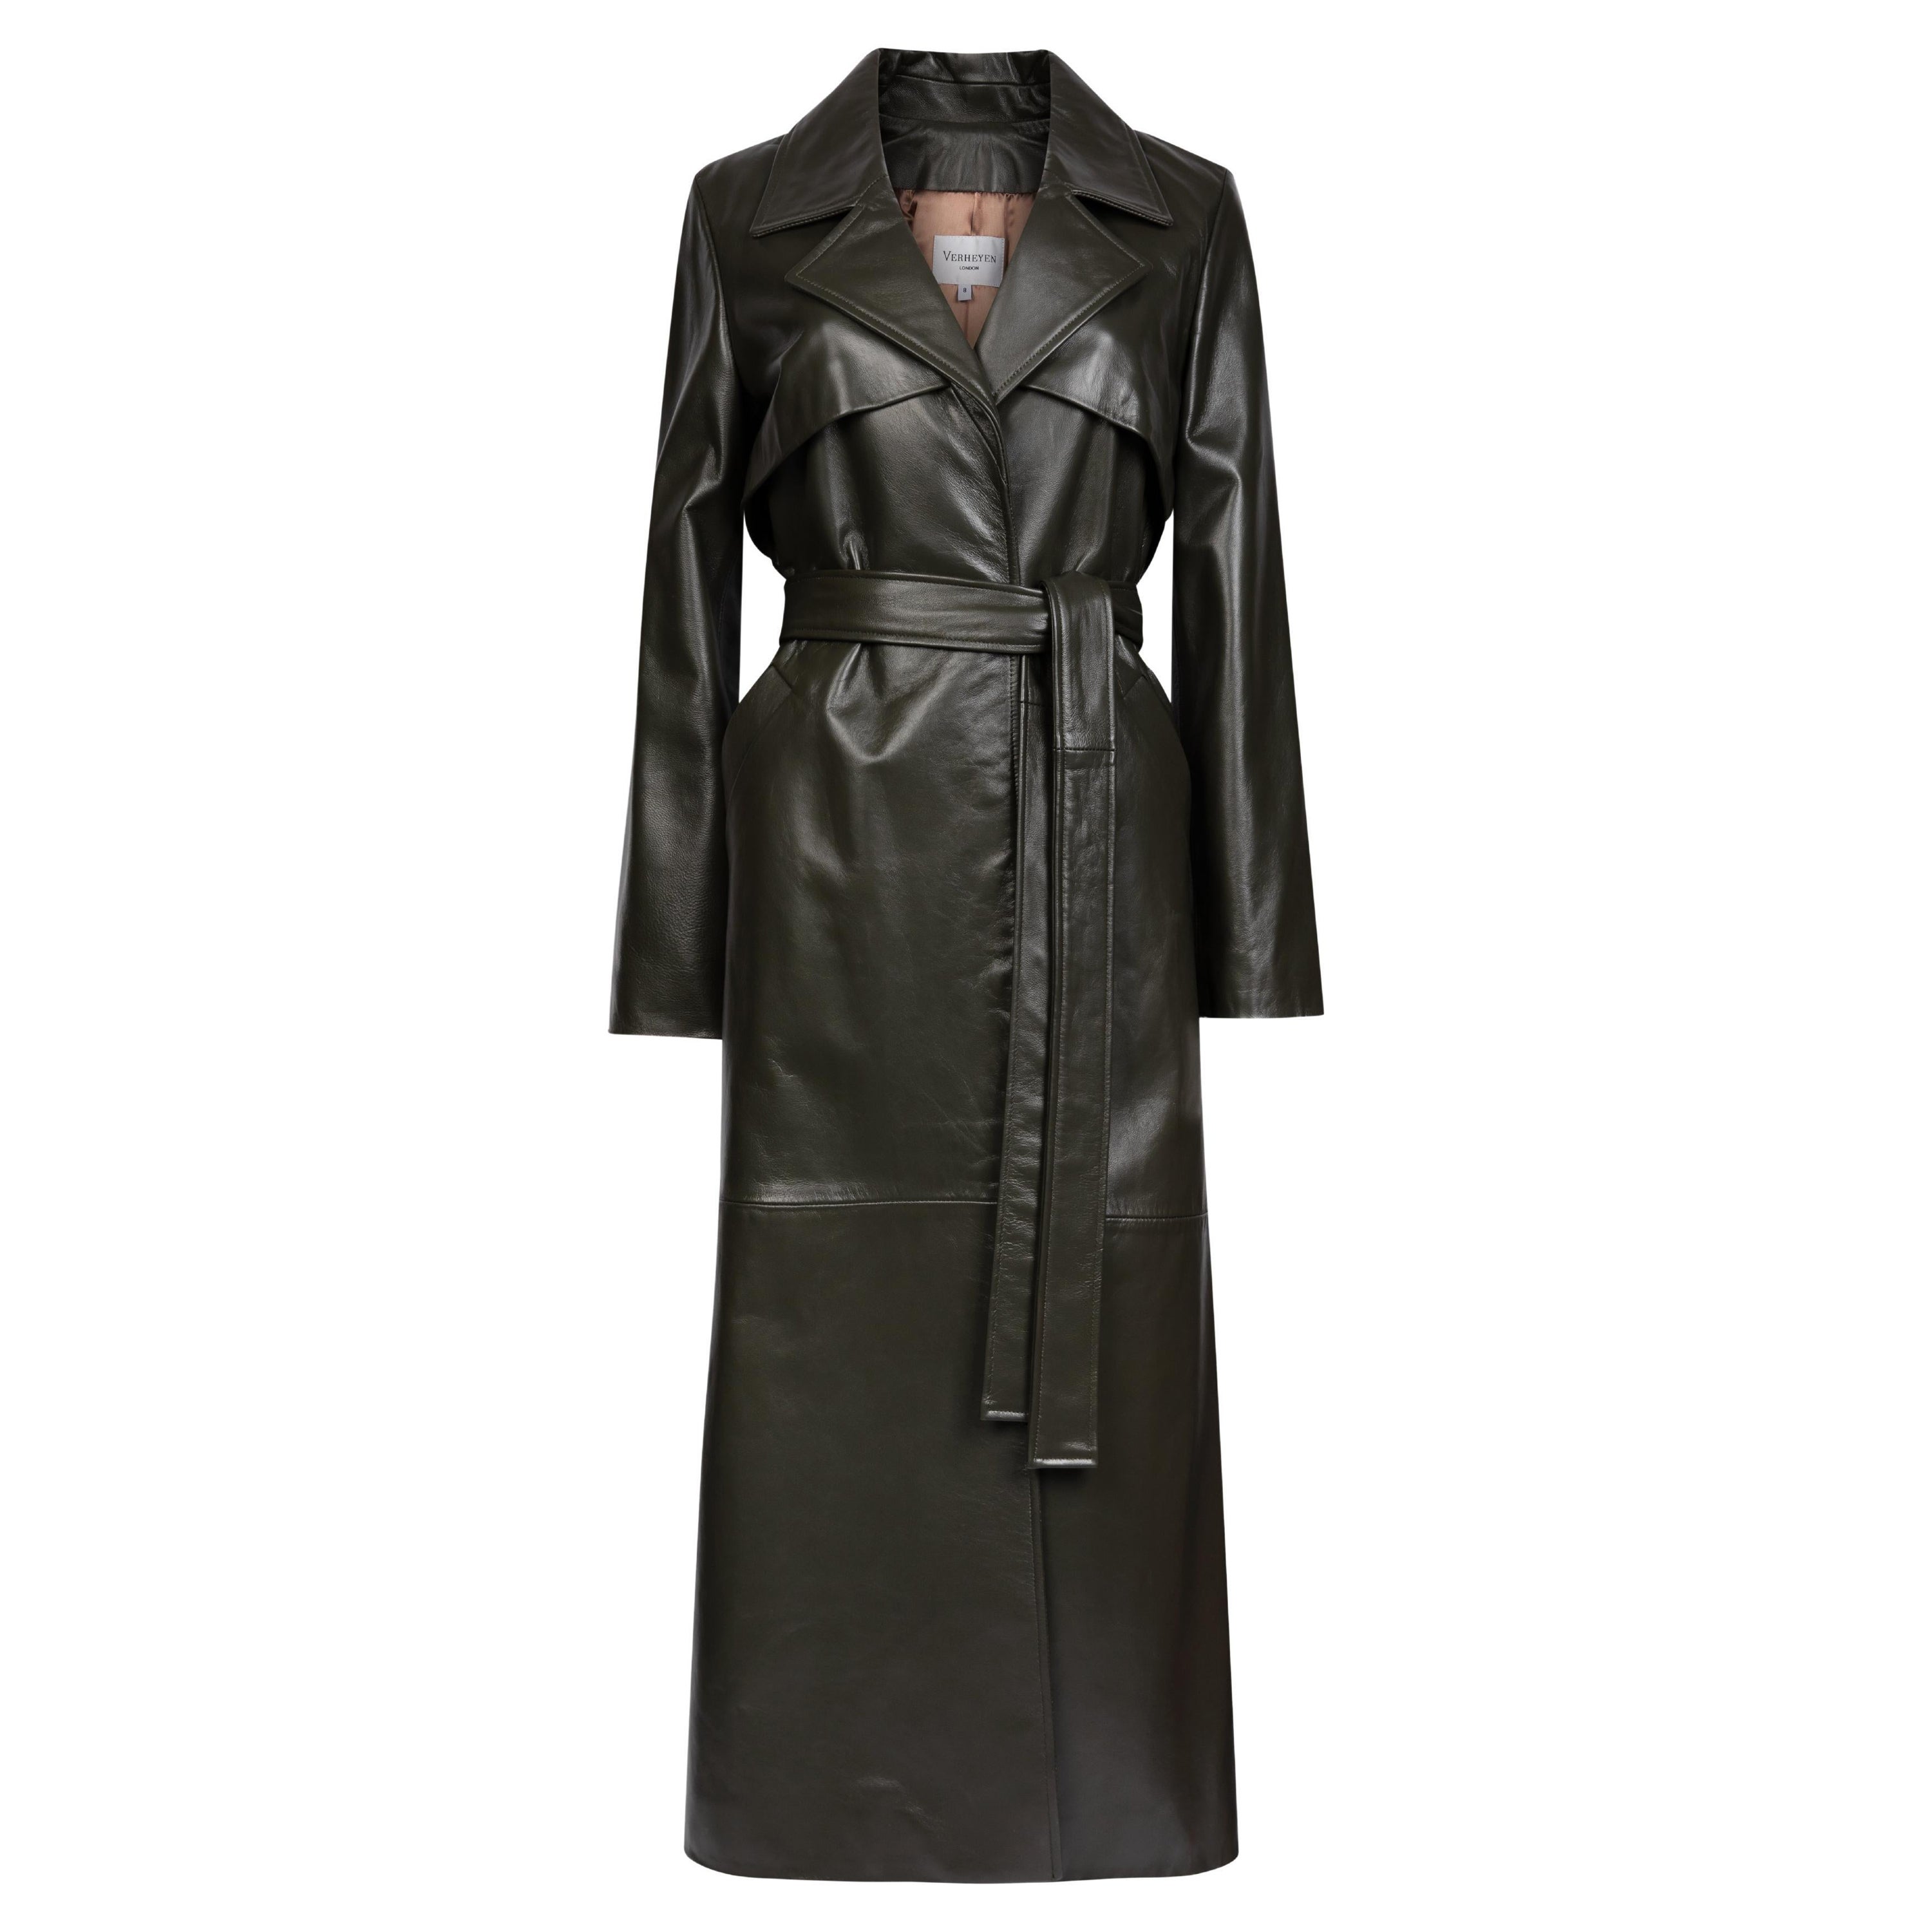 Verheyen London Leather Trench Coat in Dark Khaki Green - Size uk 8